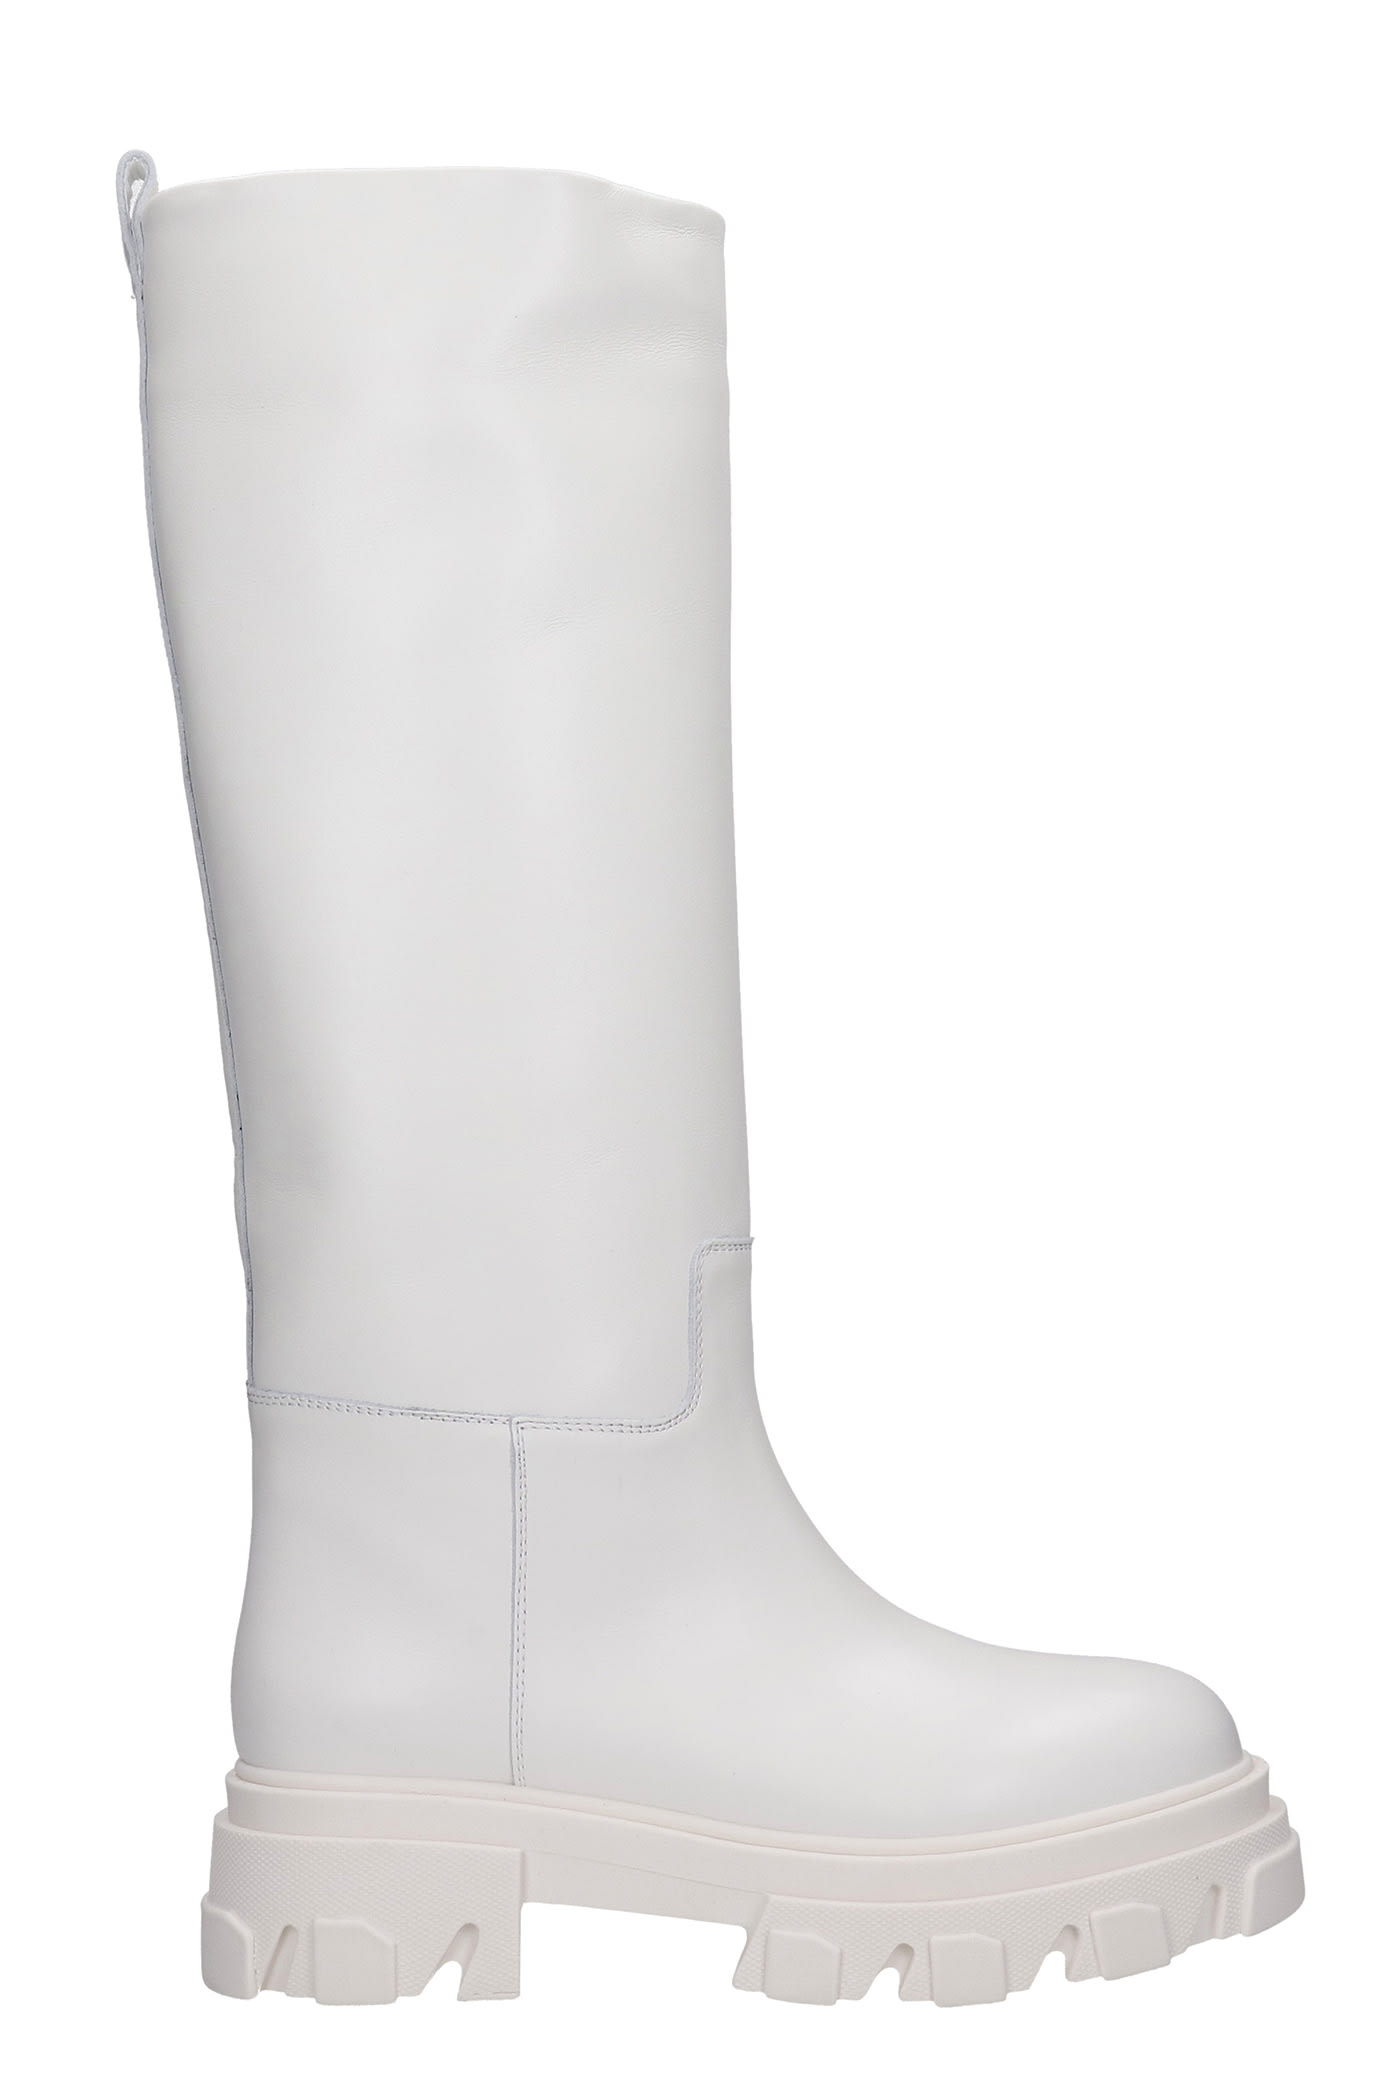 Gia X Pernille Teisbaek Perni 07 Low Heels Boots In White Leather